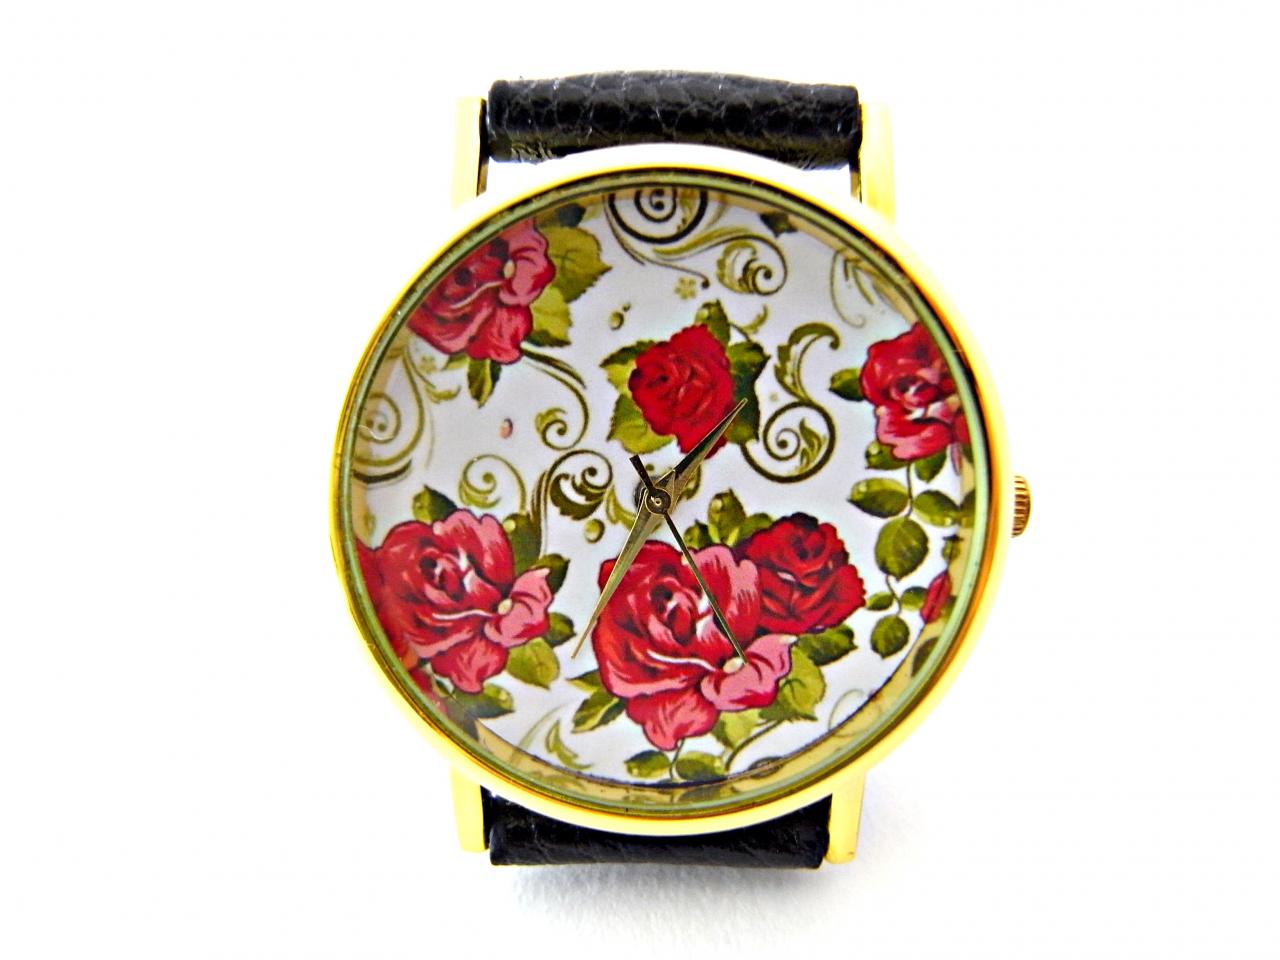 Flower Leather Wrist Watches, Woman Man Lady Unisex Watch, Genuine Leather Handmade Unique Watch #39